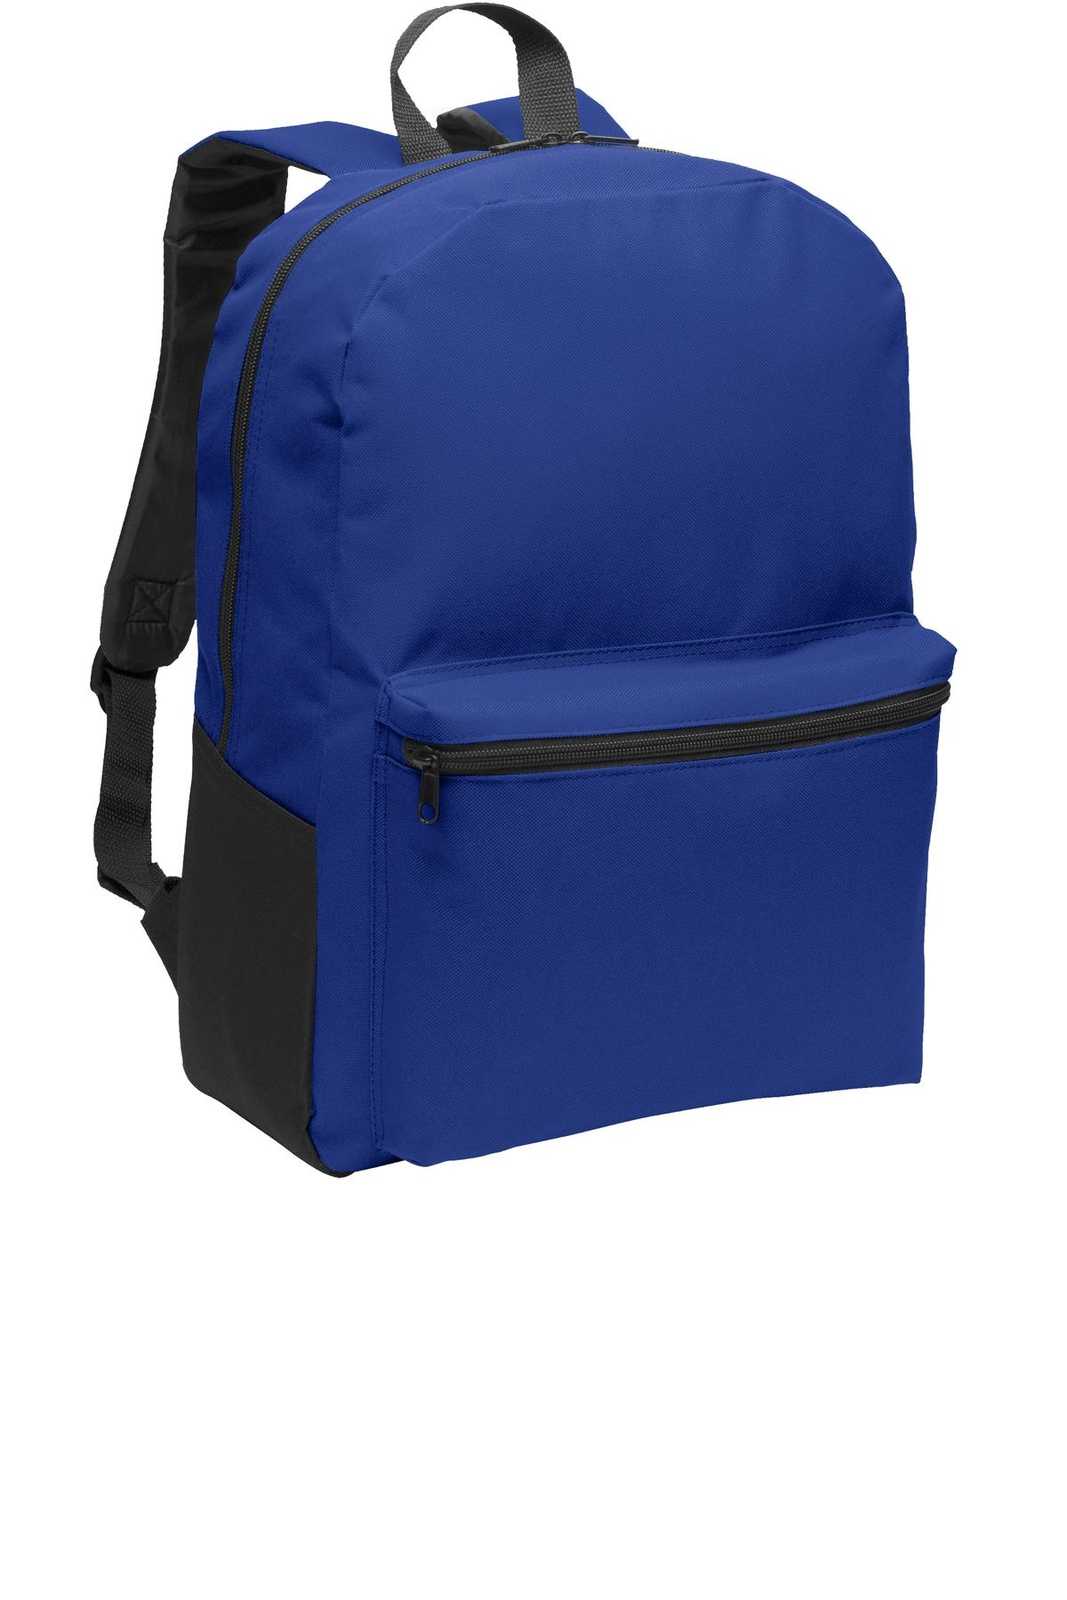 Port Authority BG203 Value Backpack - Twilight Blue - HIT a Double - 1